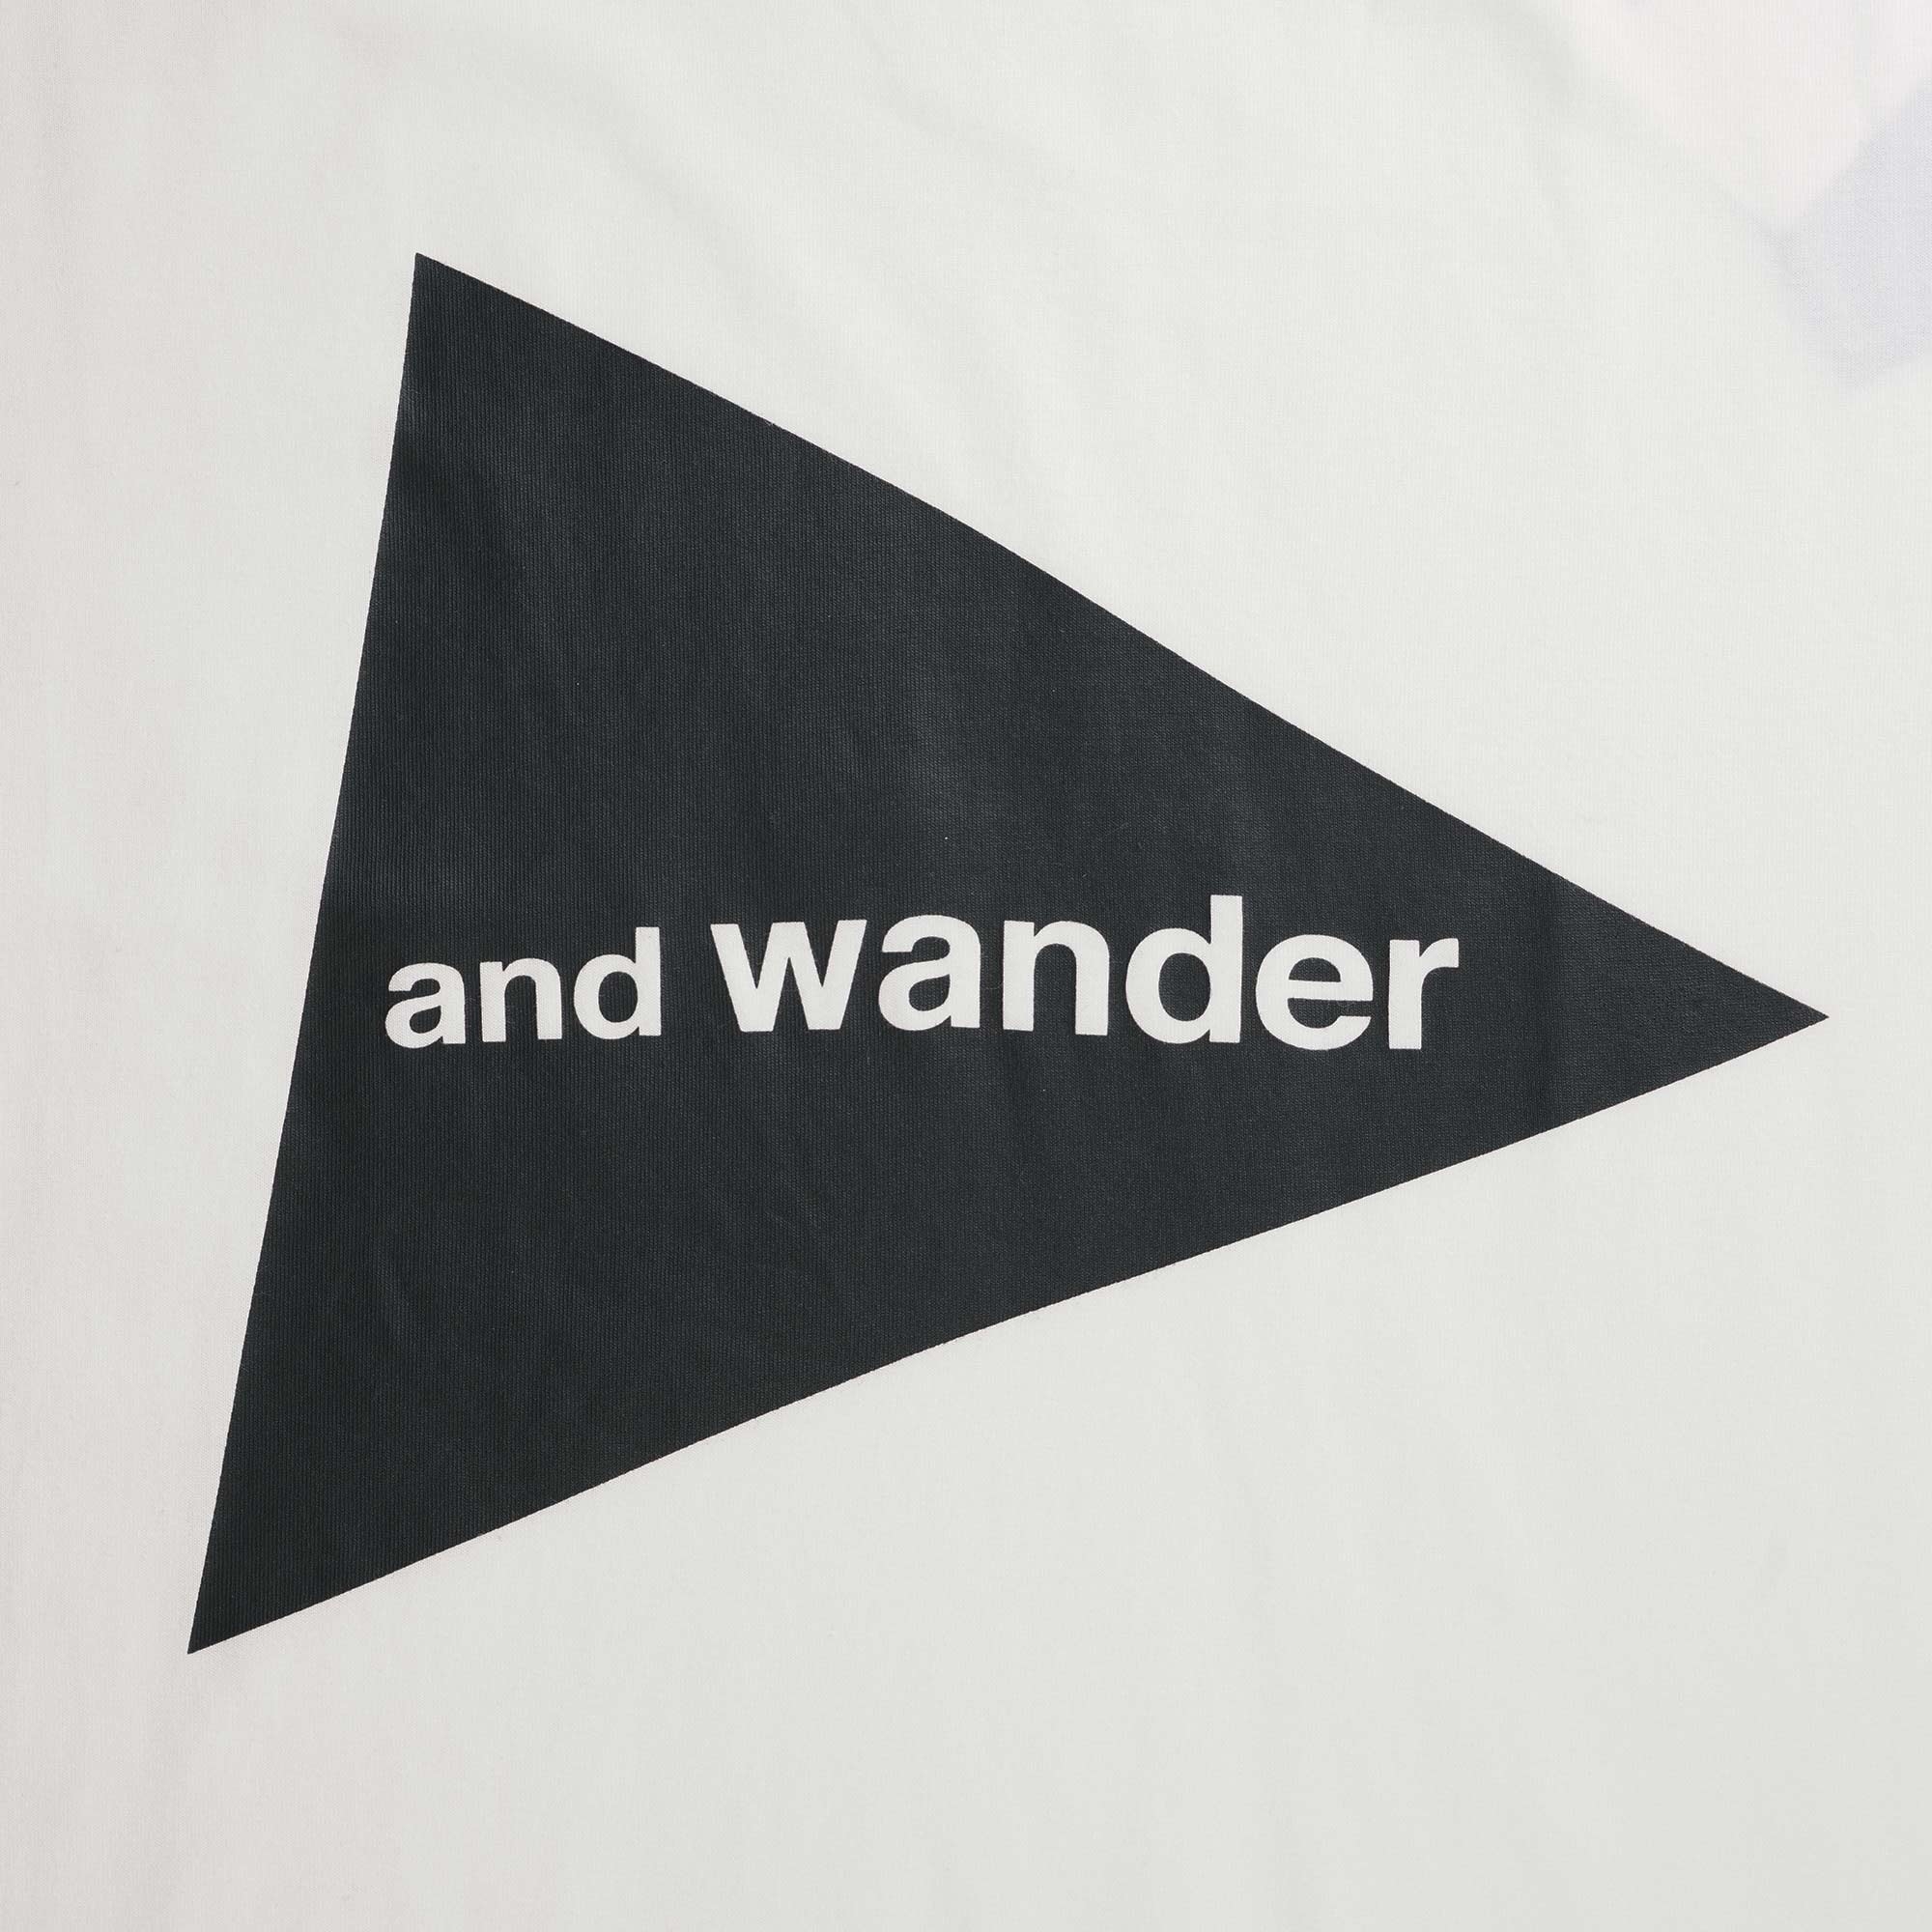 And Wander Big Logo T-Shirt White